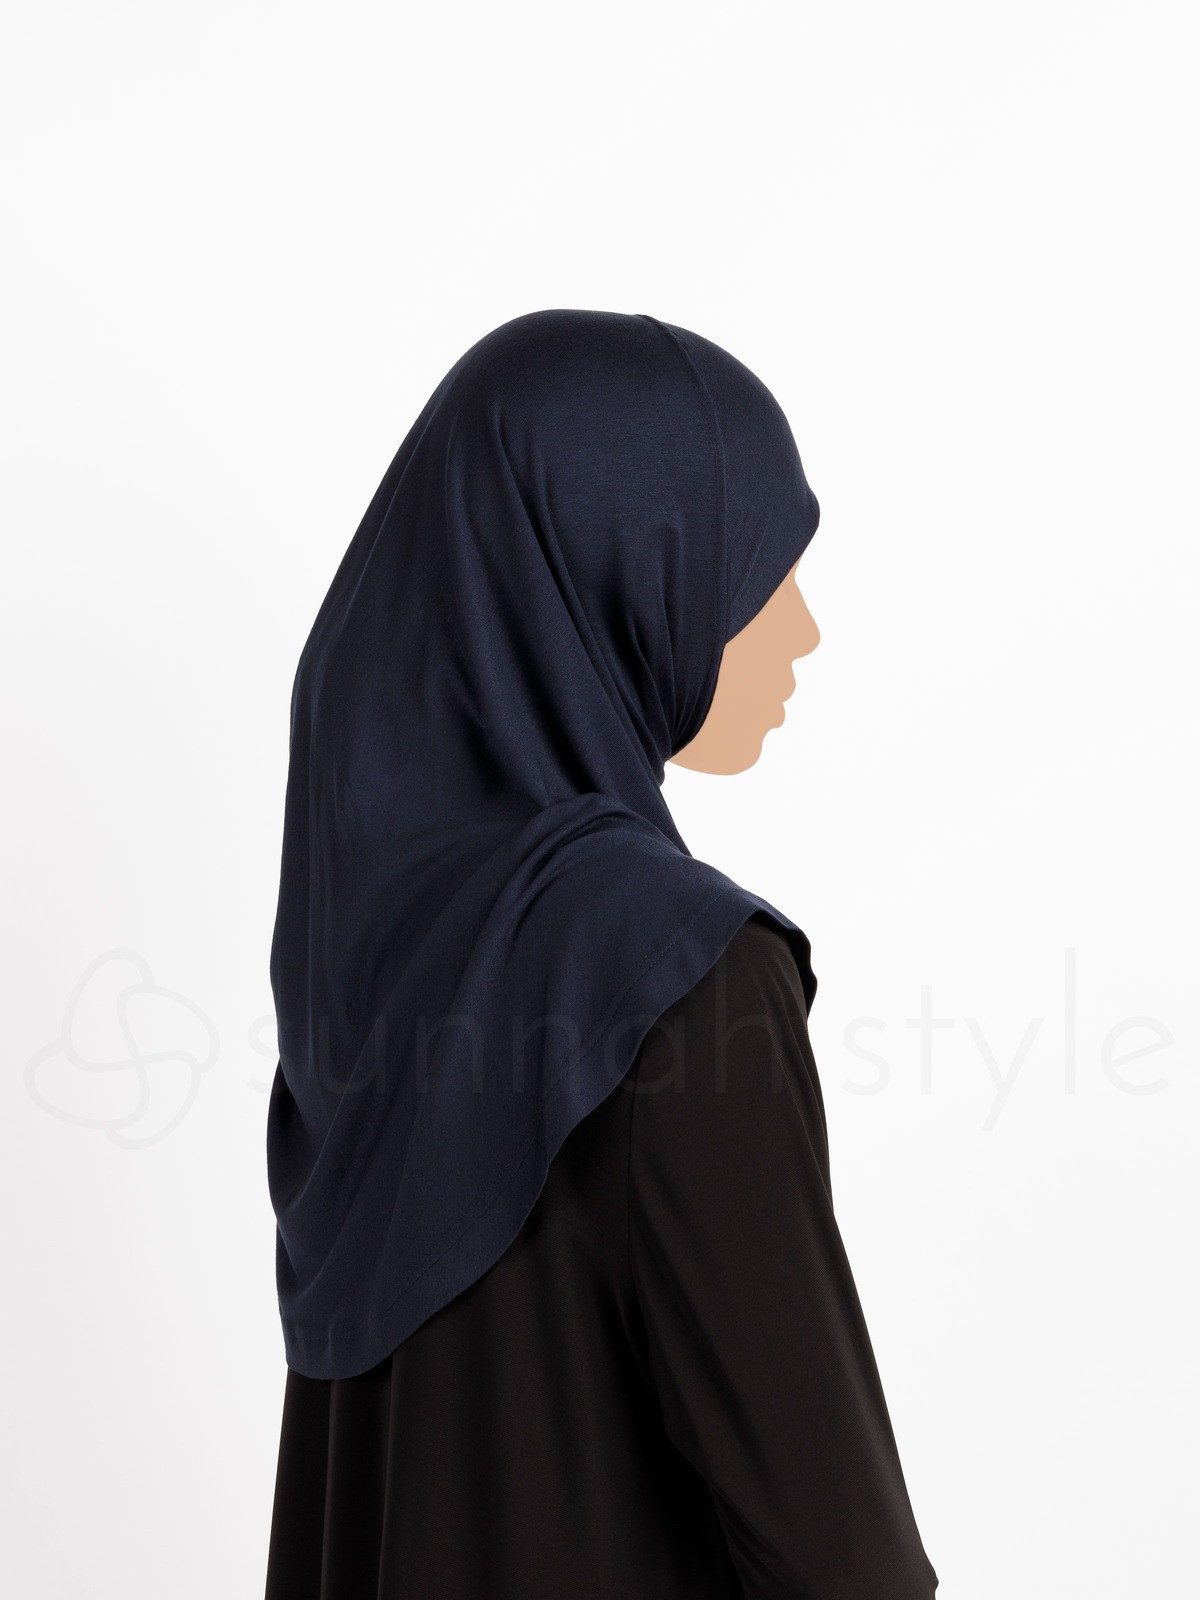 Sunnah Style - Girls Urban Hijab (Light Coral)